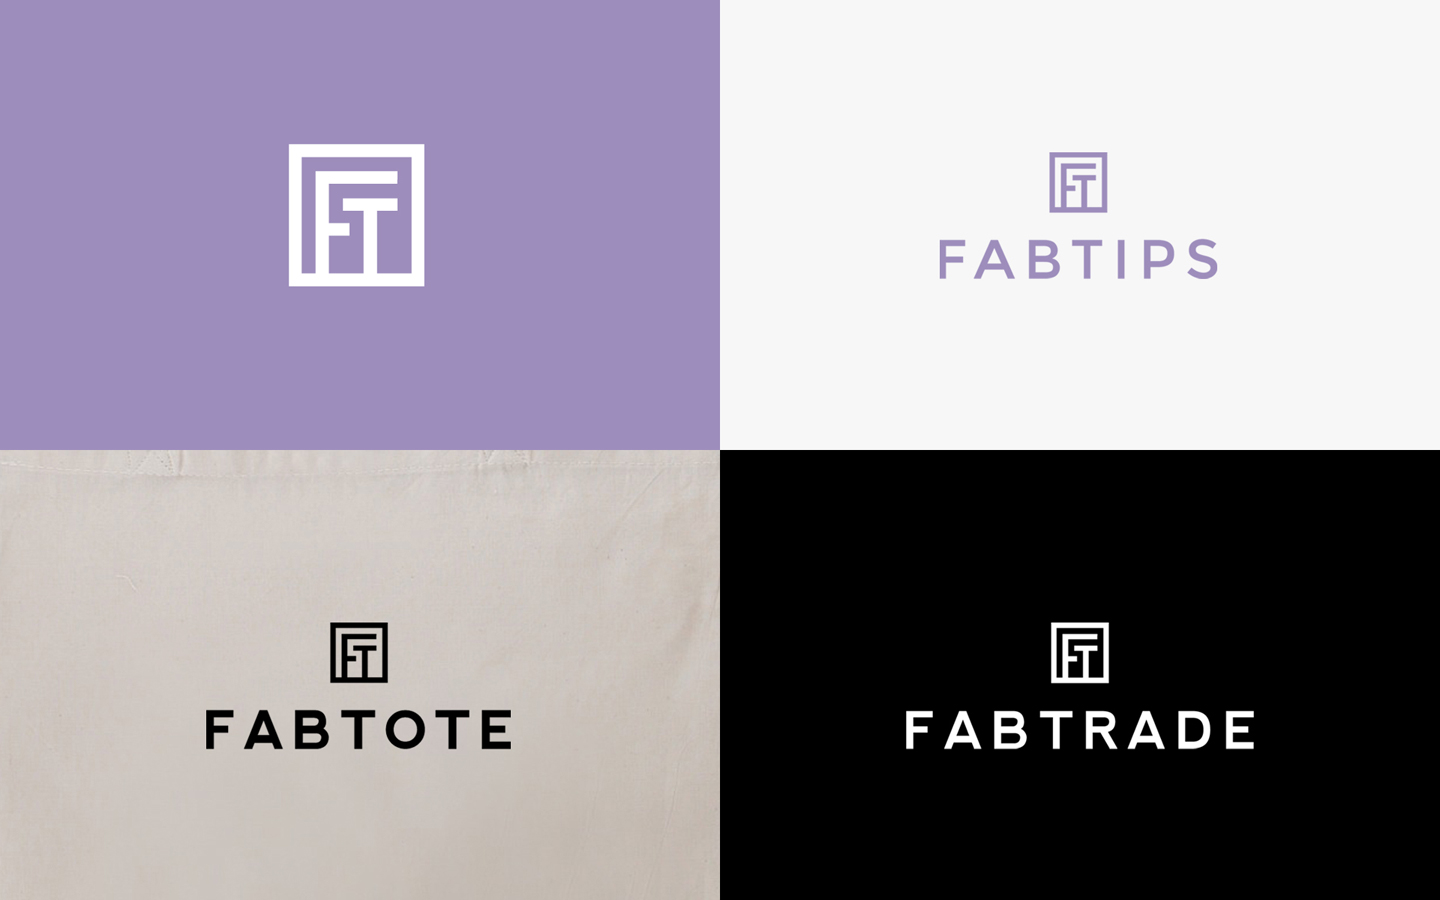 FabTips Luxury Blogzine, Logo Design in Brand Colours